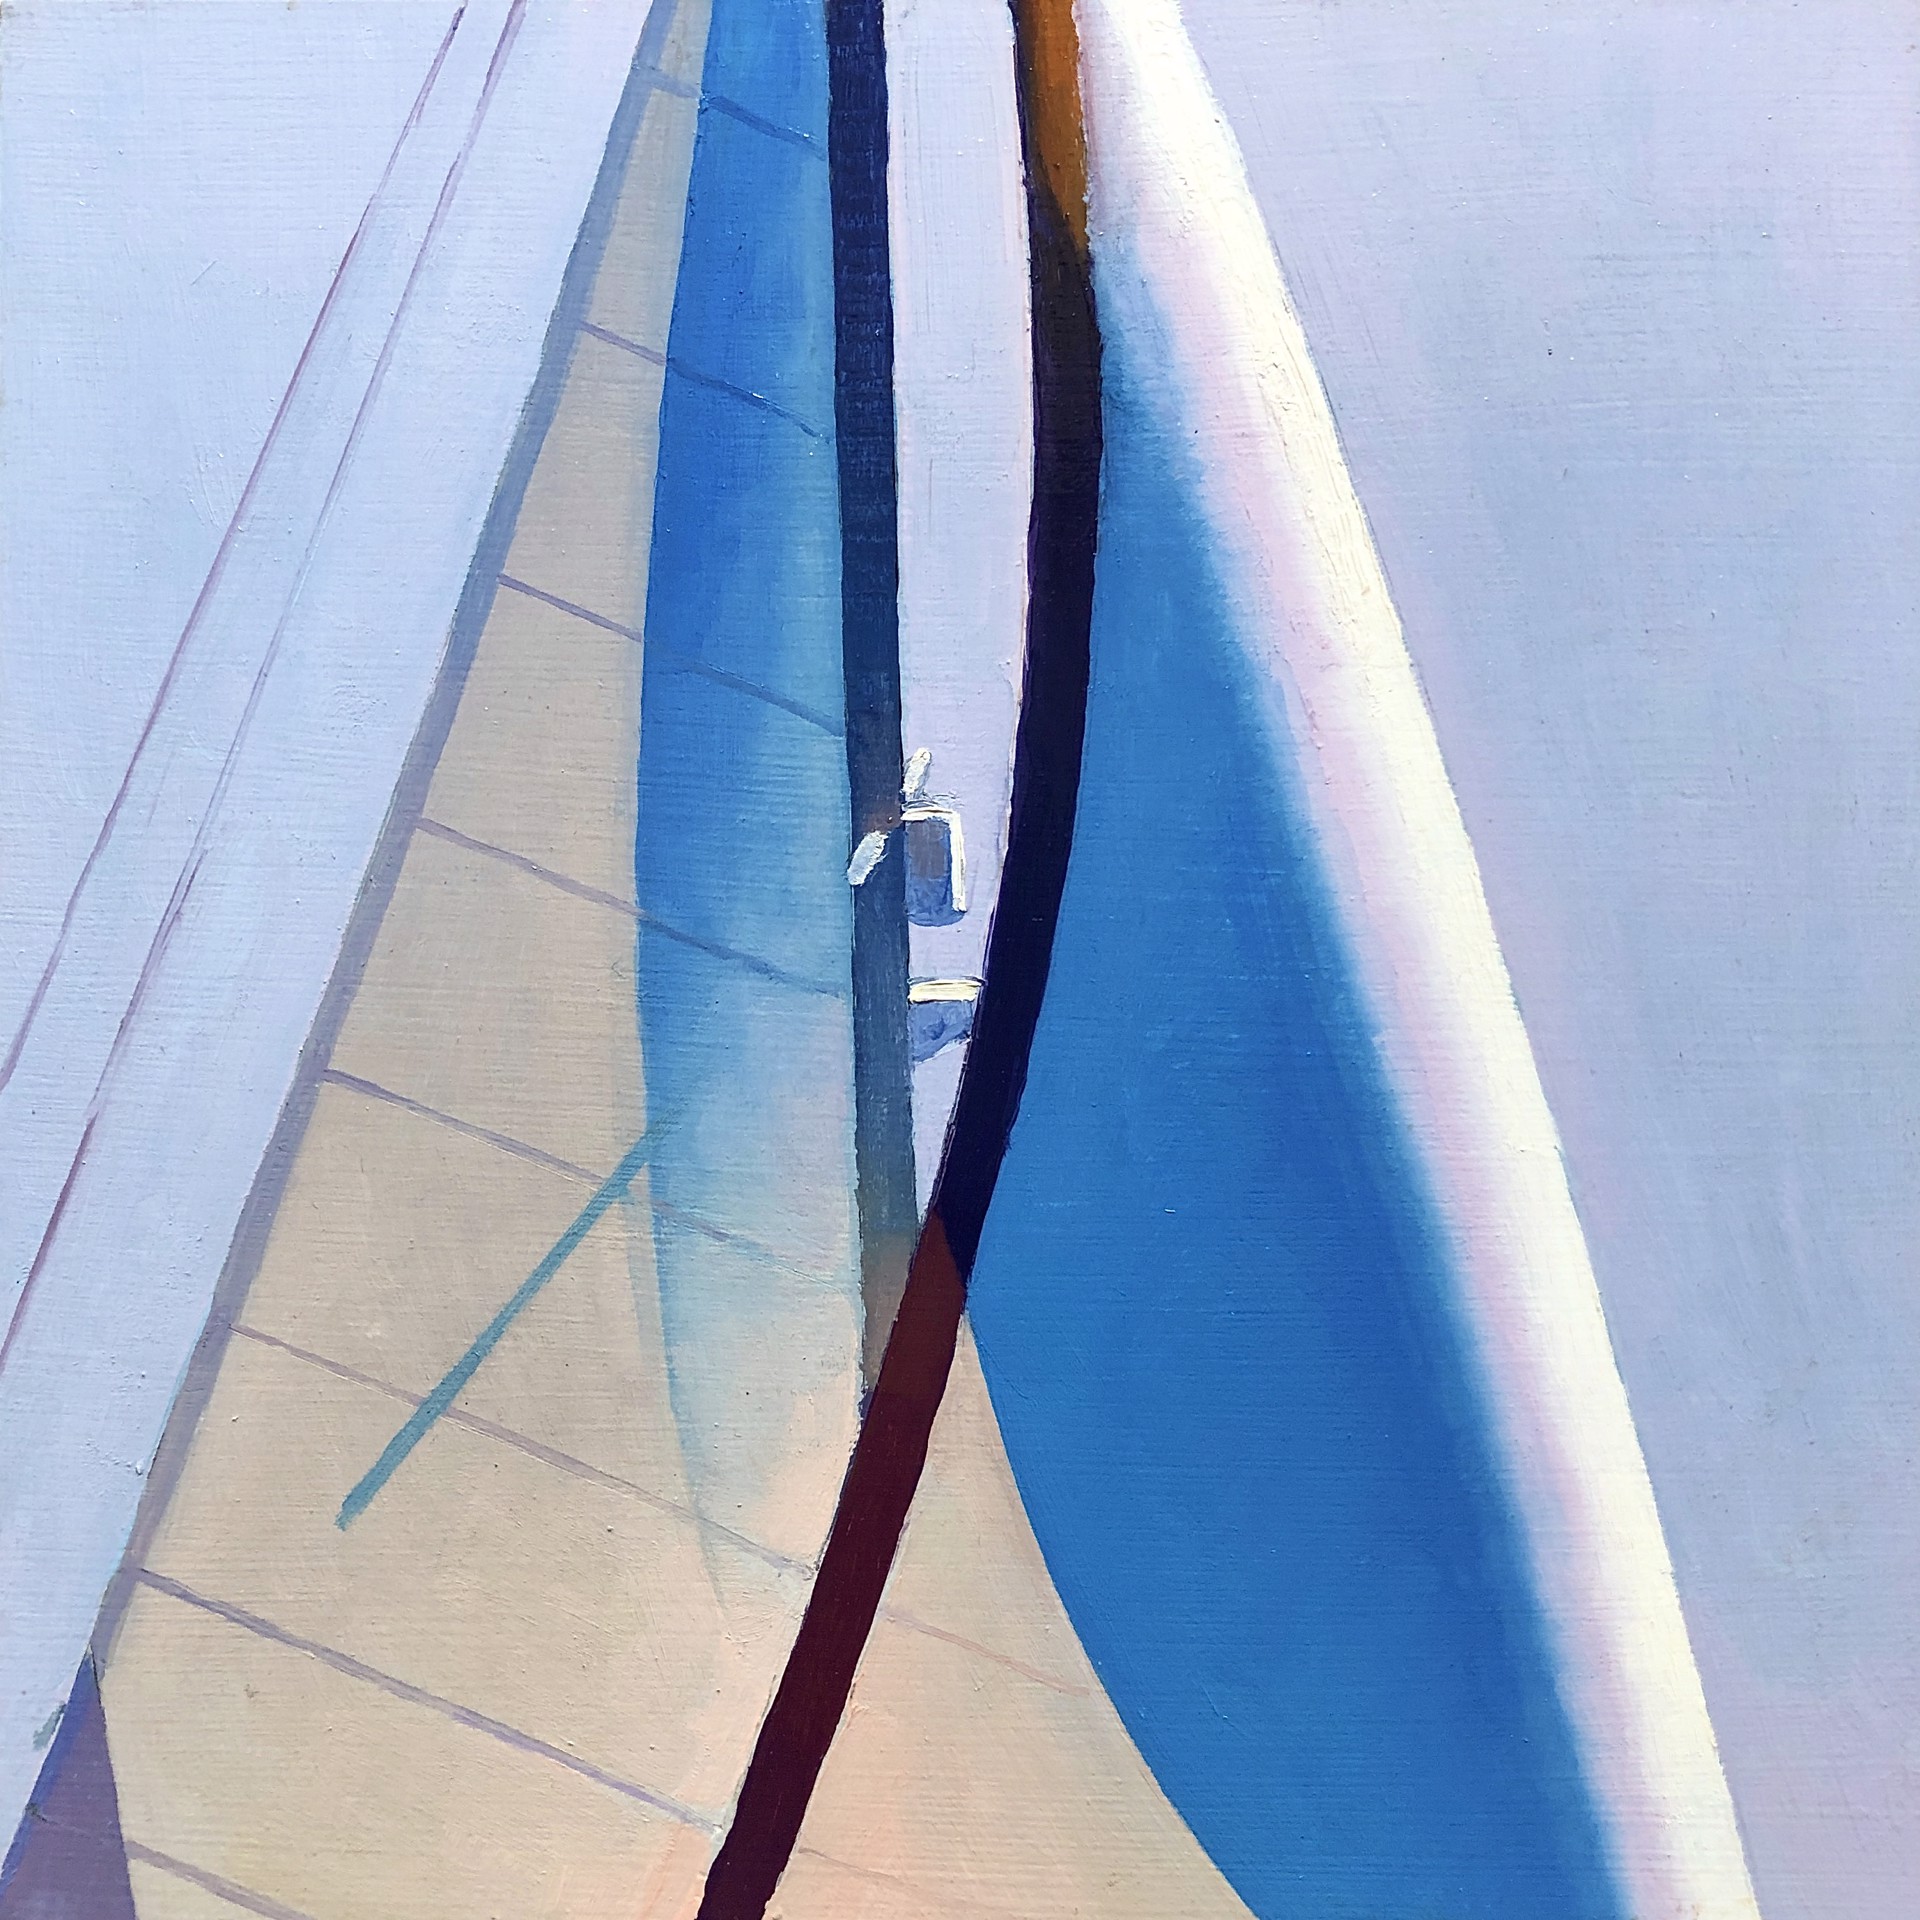 Sail Shapes #4 by Polly Seip